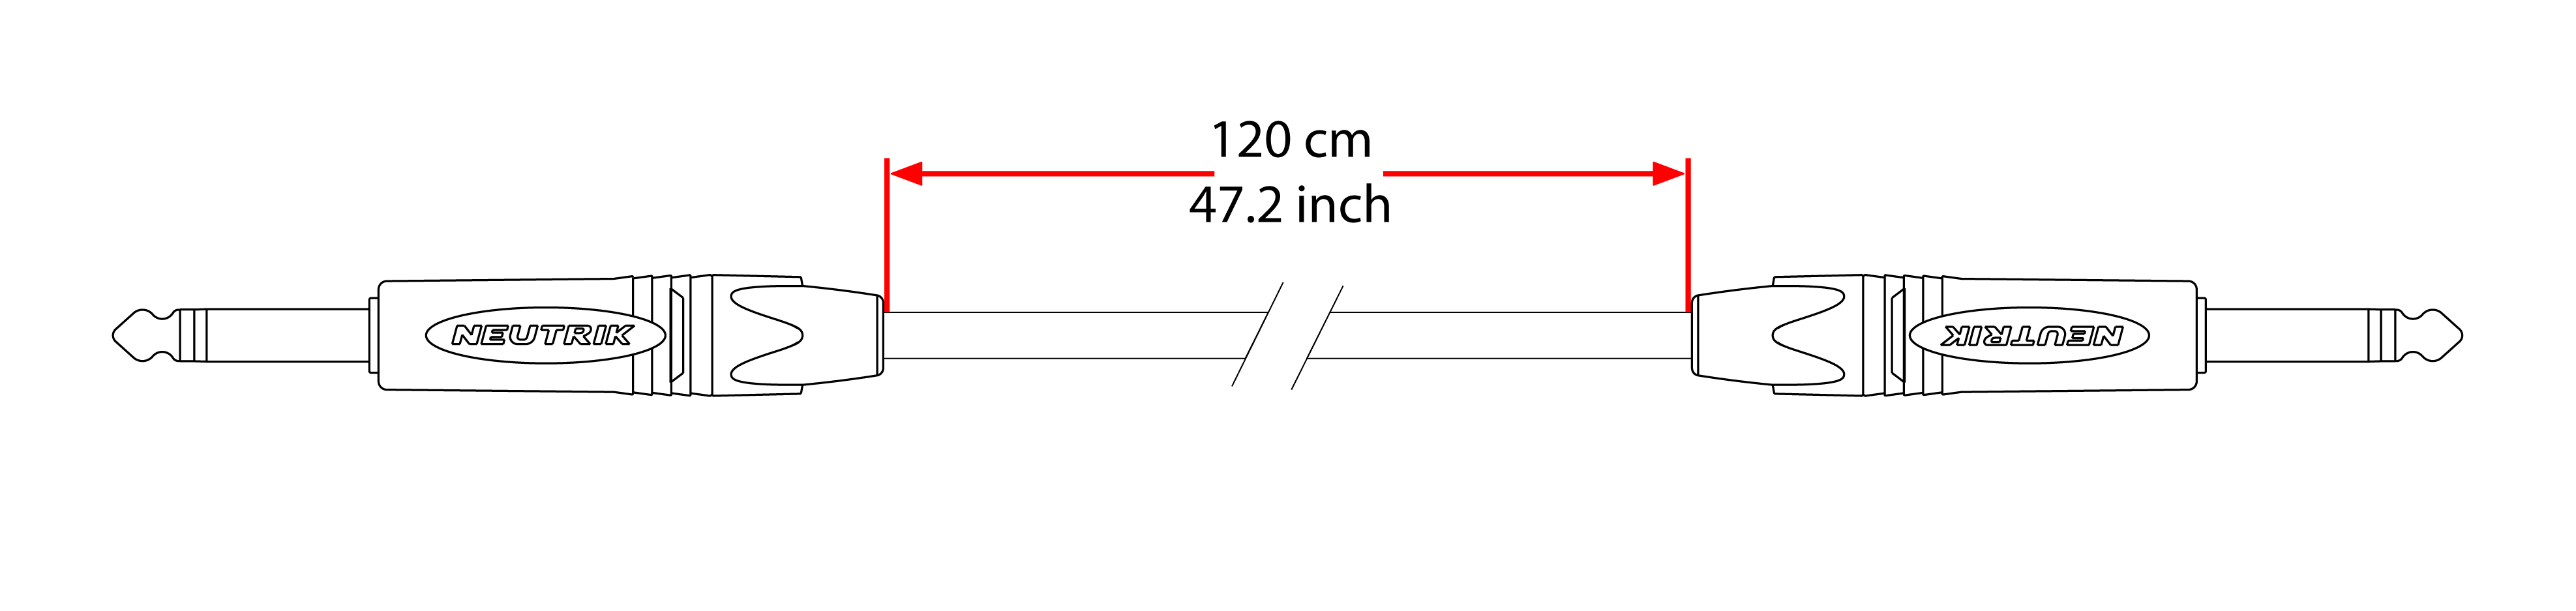 120cm patch cable